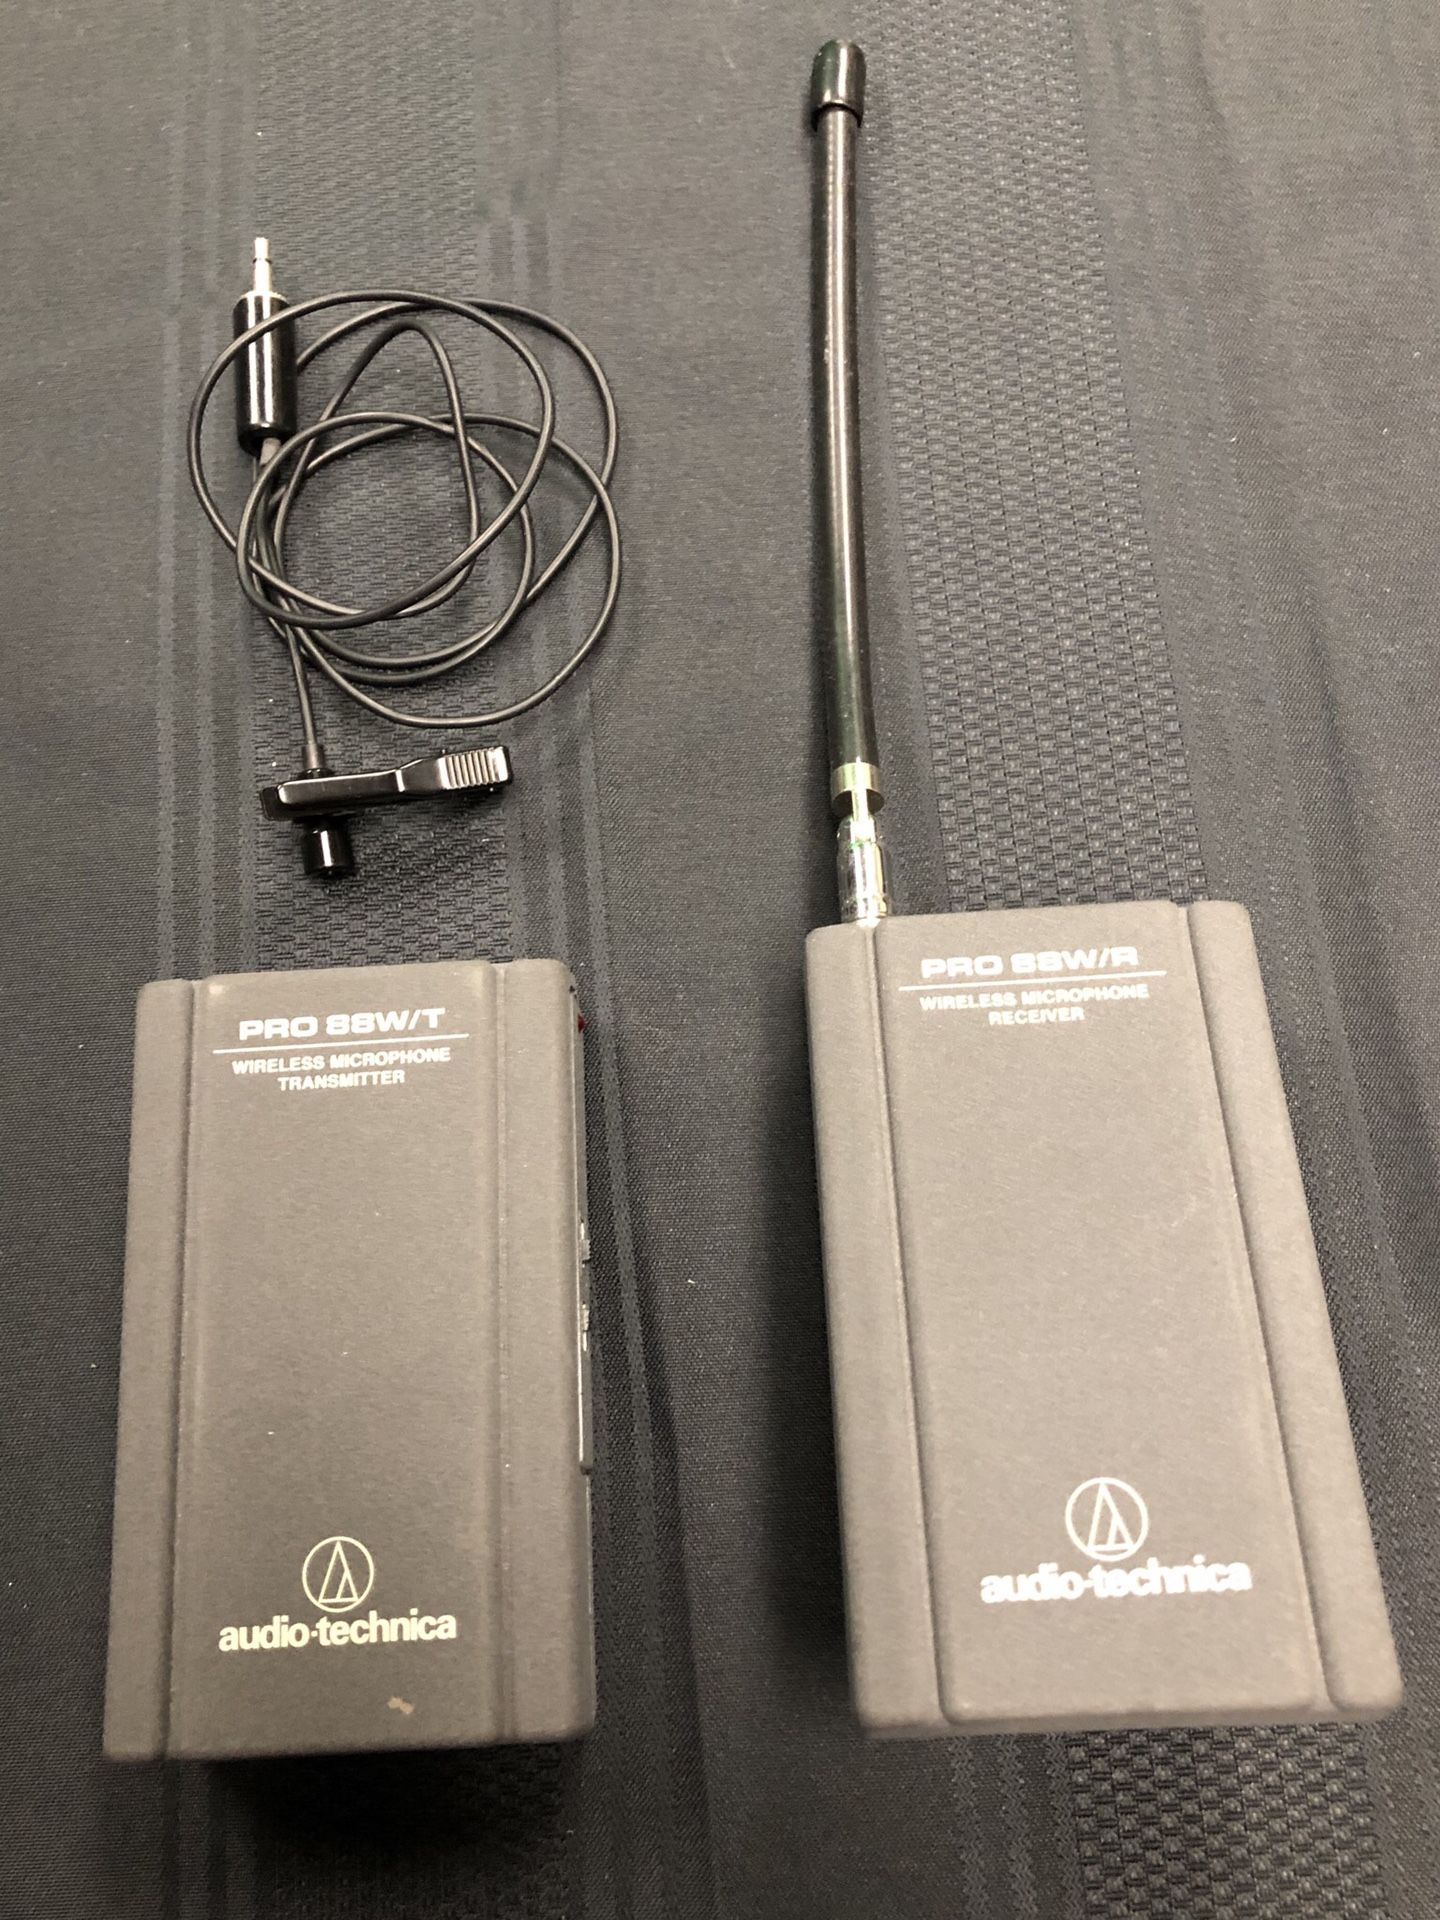 Audio Technica Pro 88 W/R wireless lavalier mic system